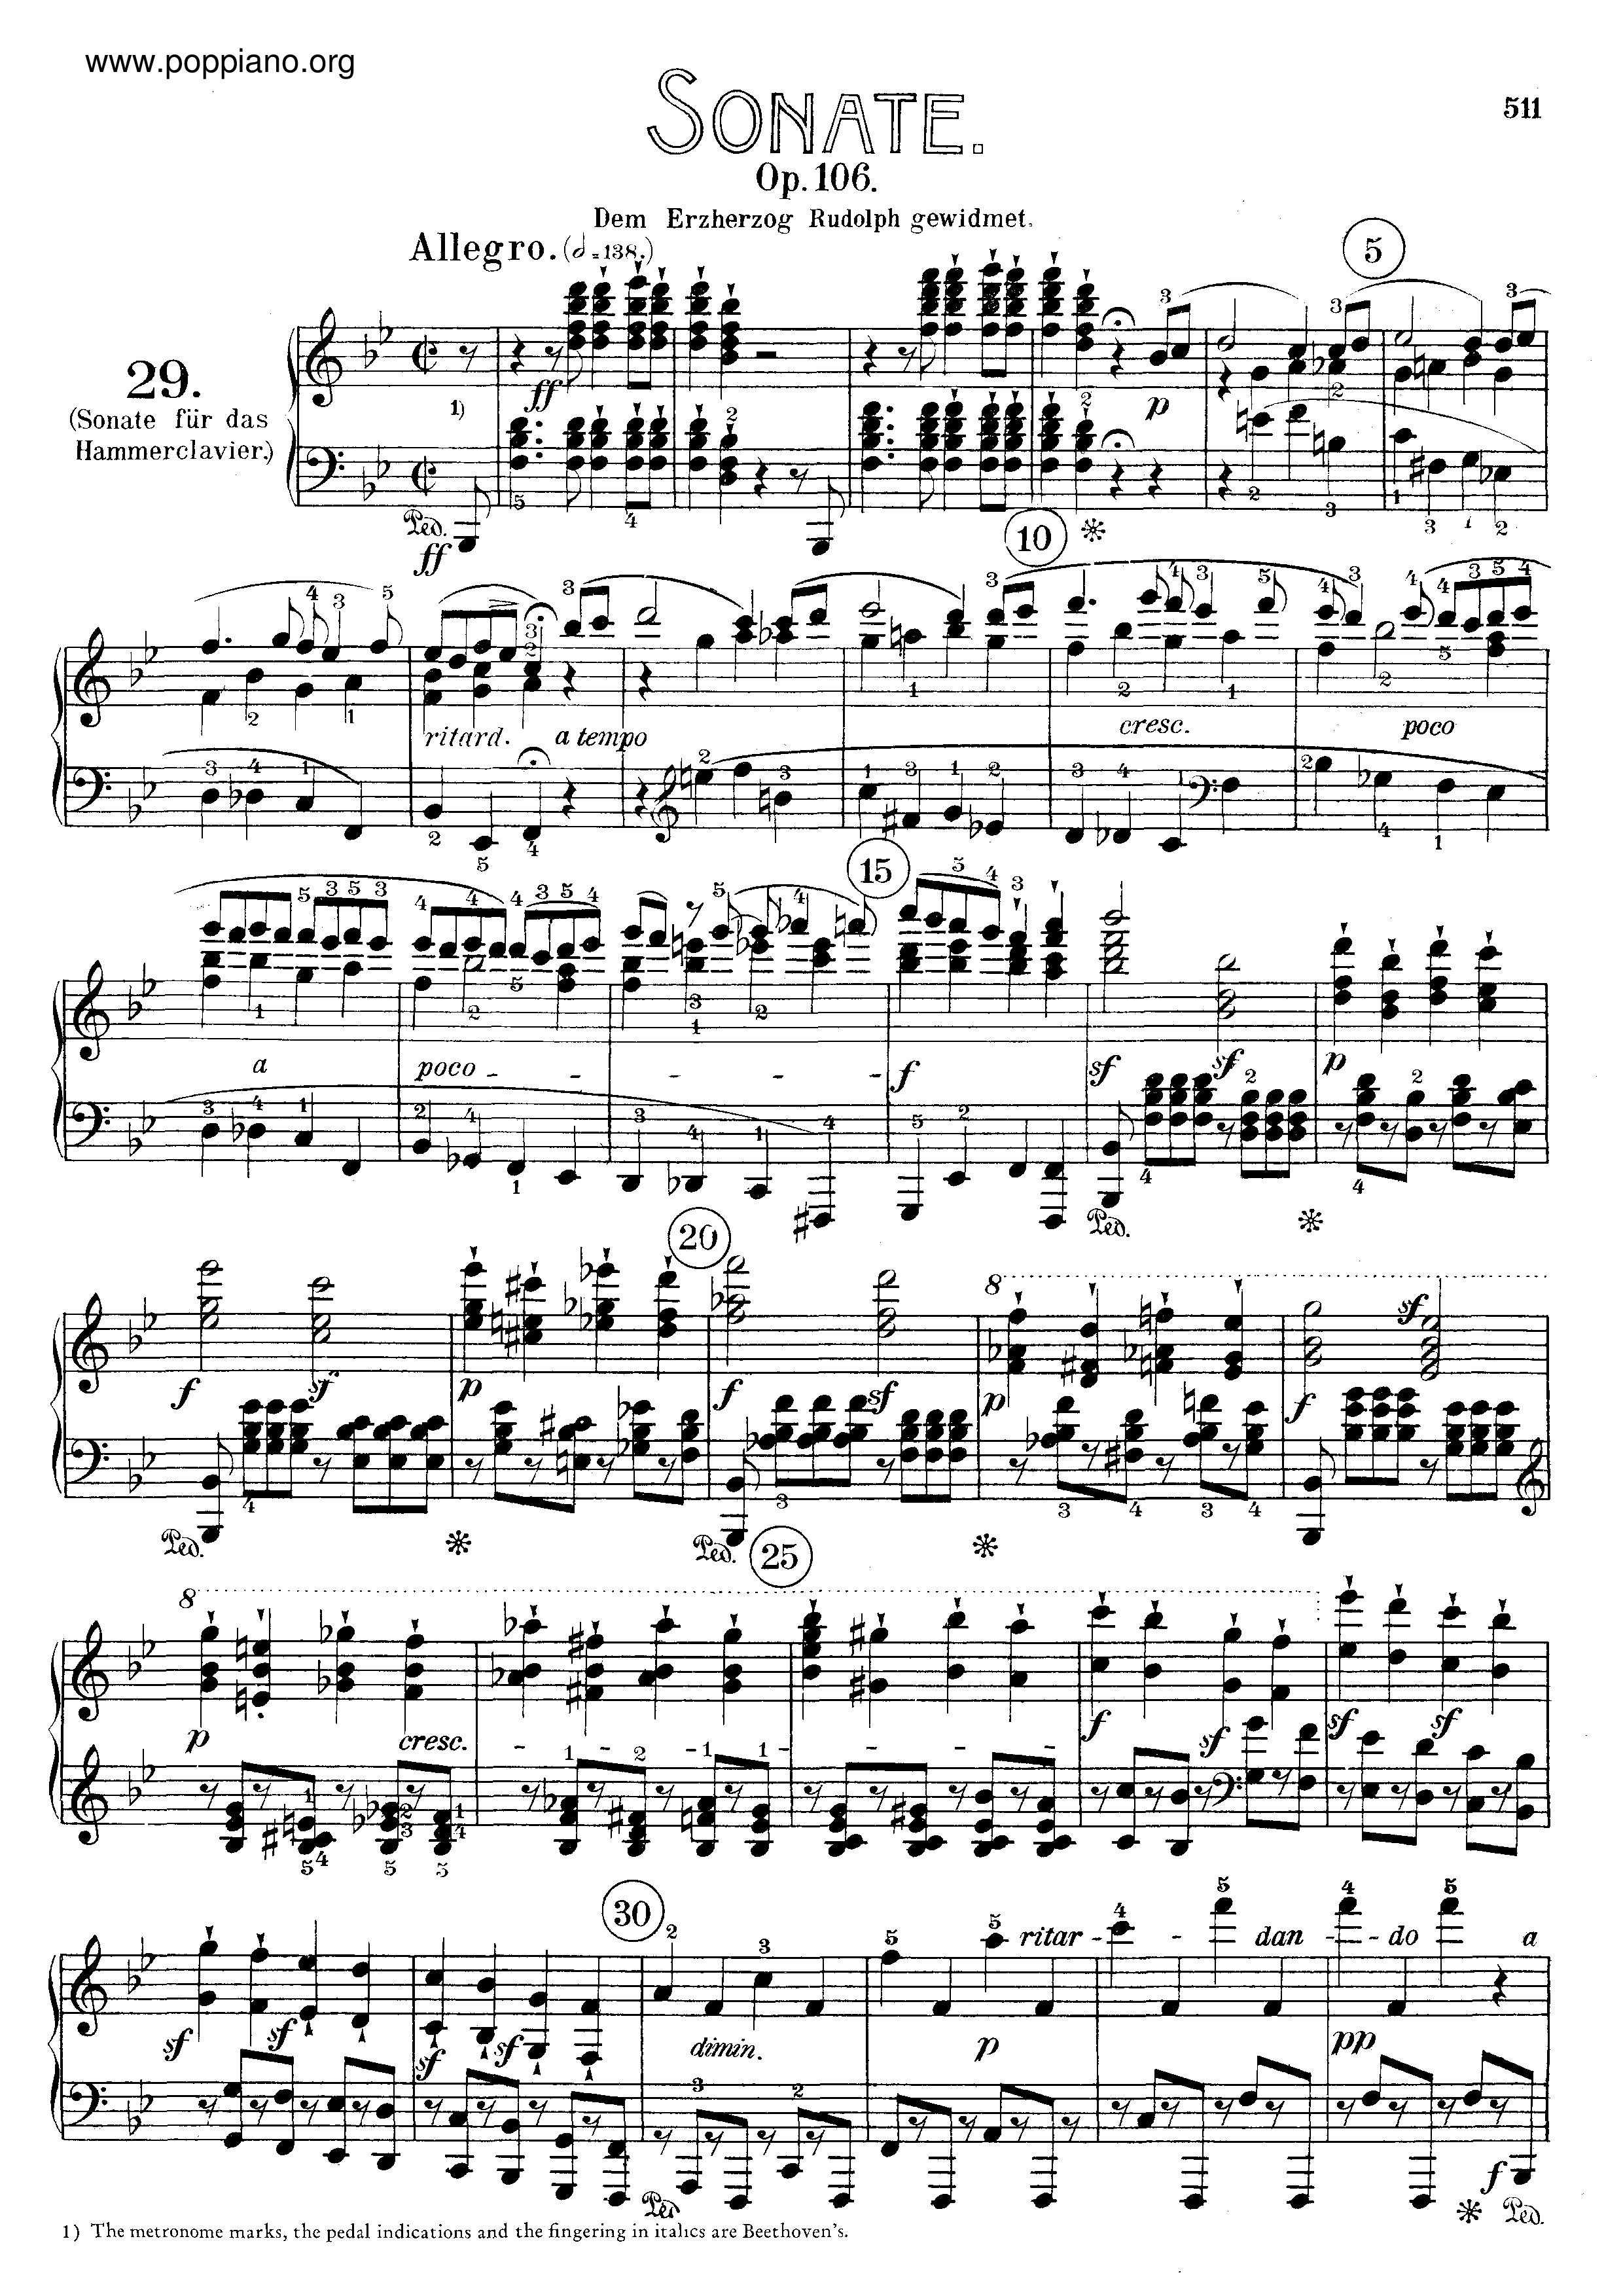 Sonata No. 29 in B-flat majorピアノ譜